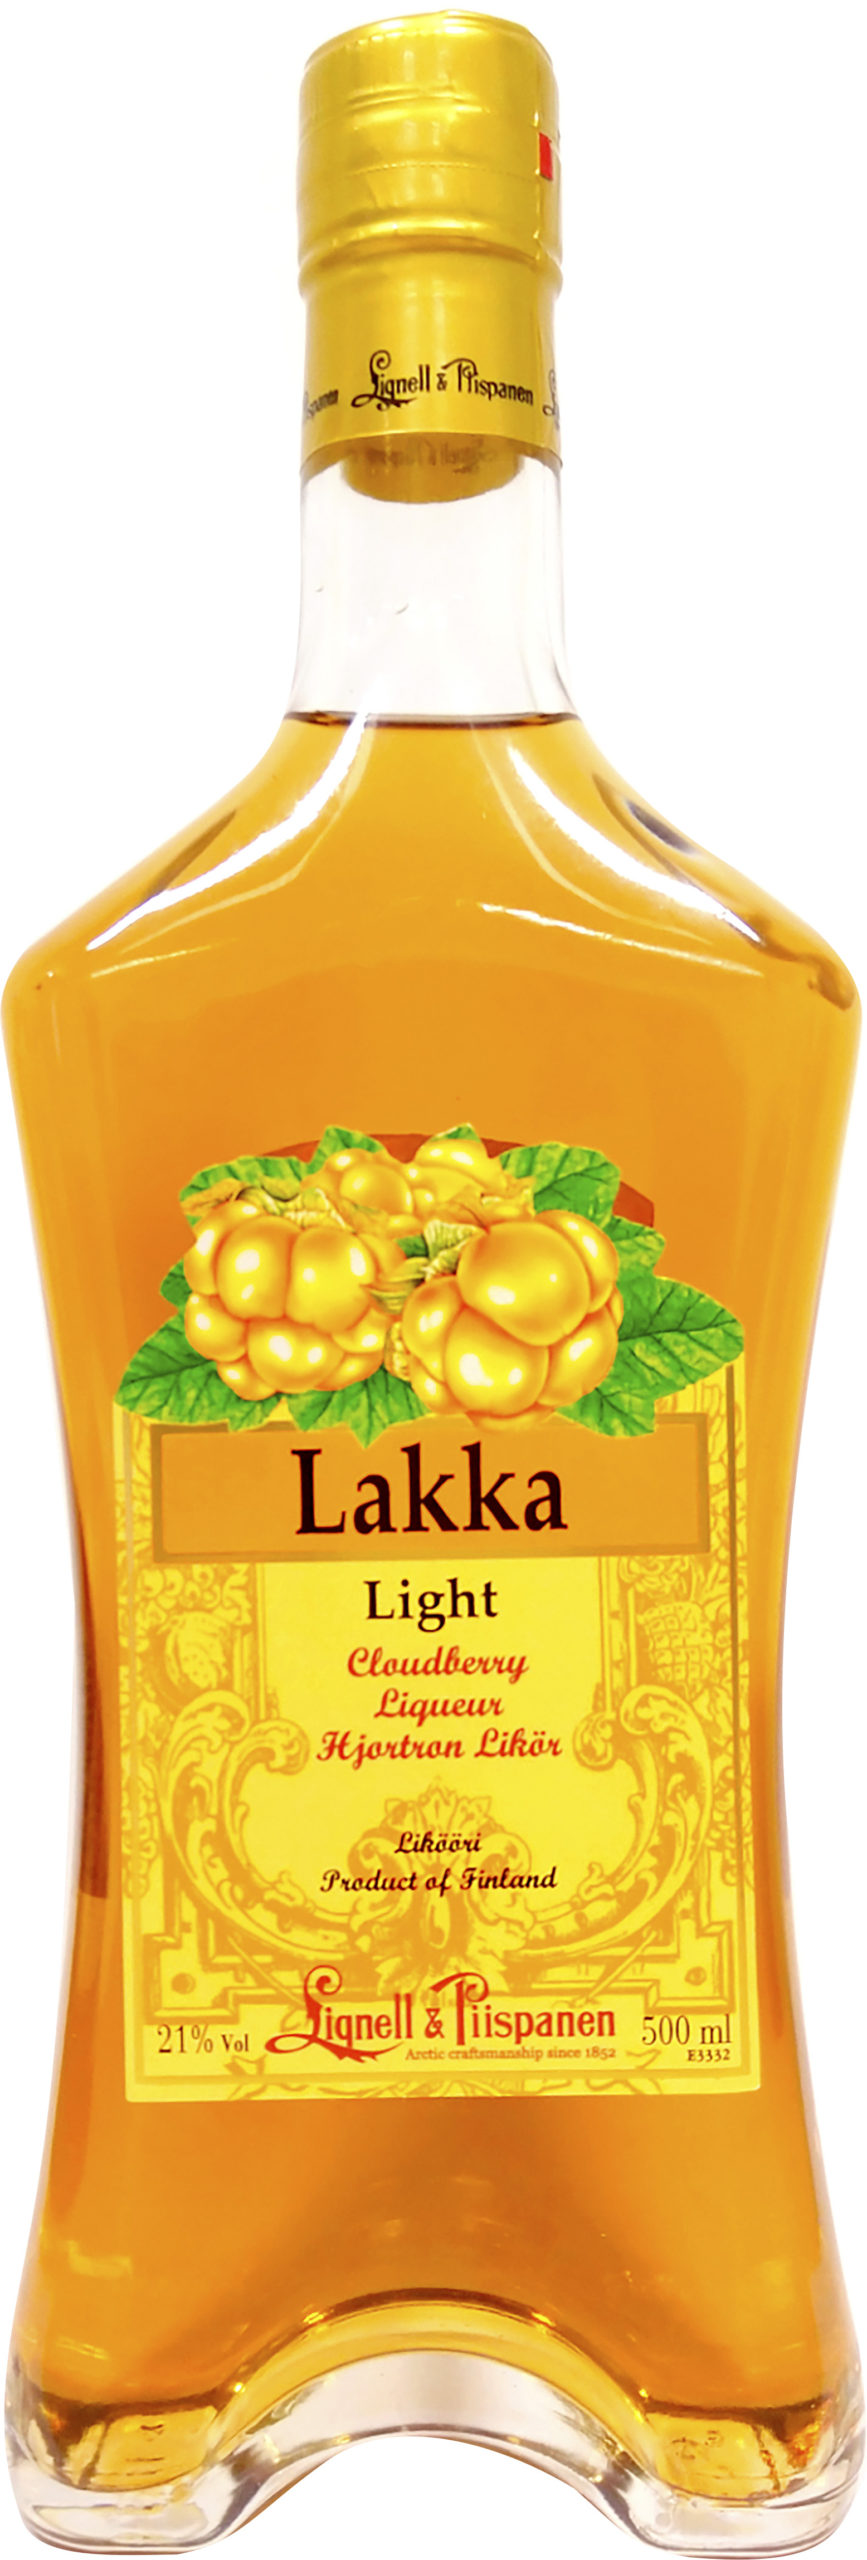 Lignell & Piispanen Lakka-Light